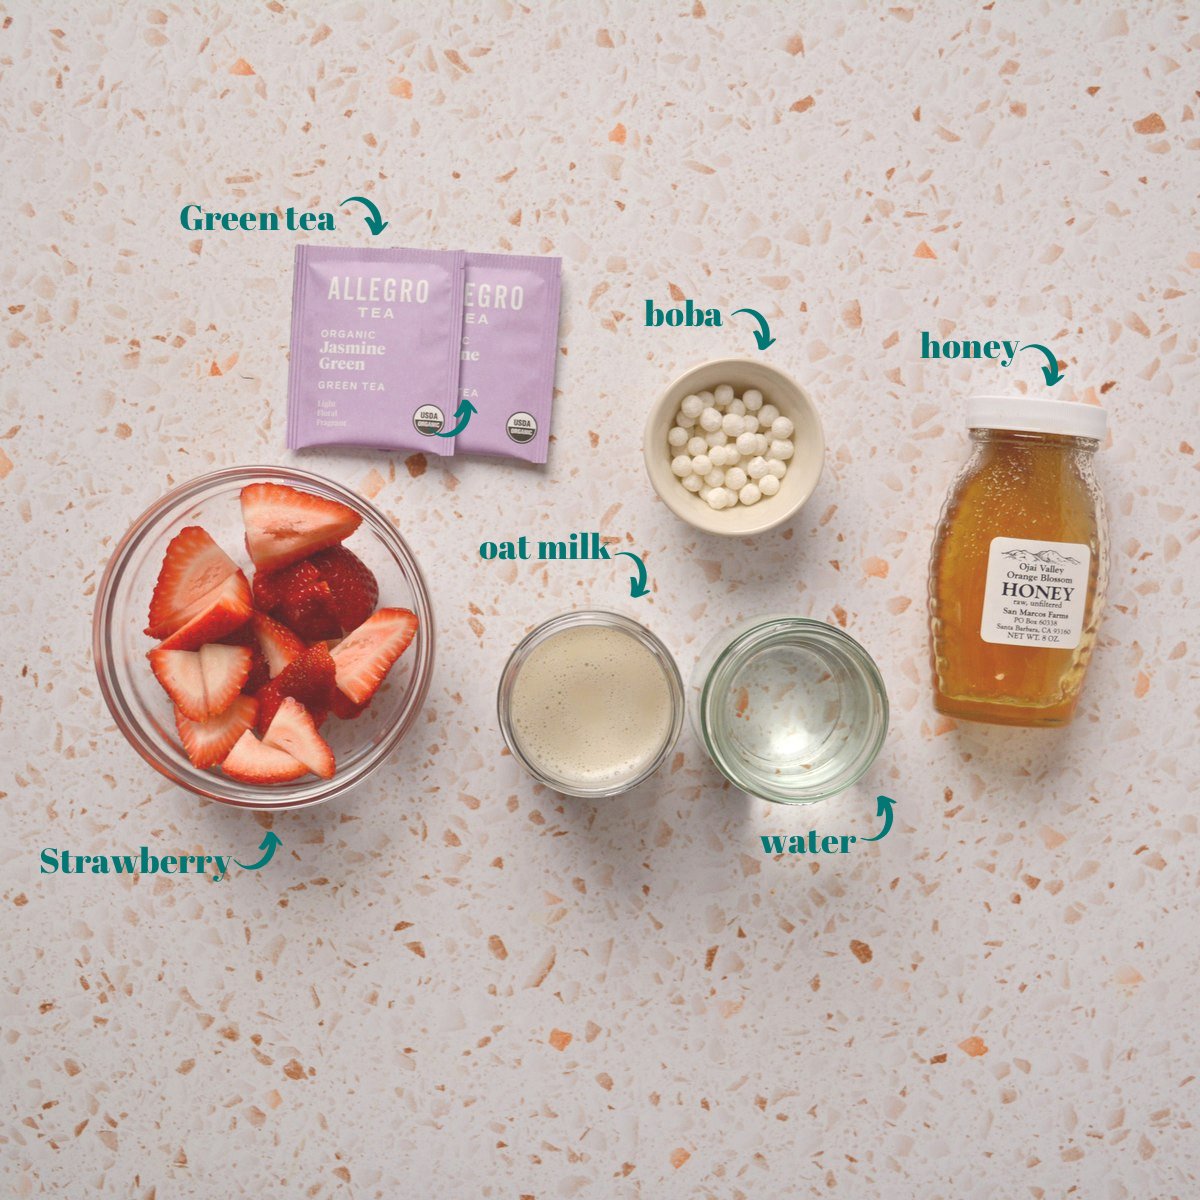 Overview of tea, strawberries, honey, water, milk, and tapioca pearls.